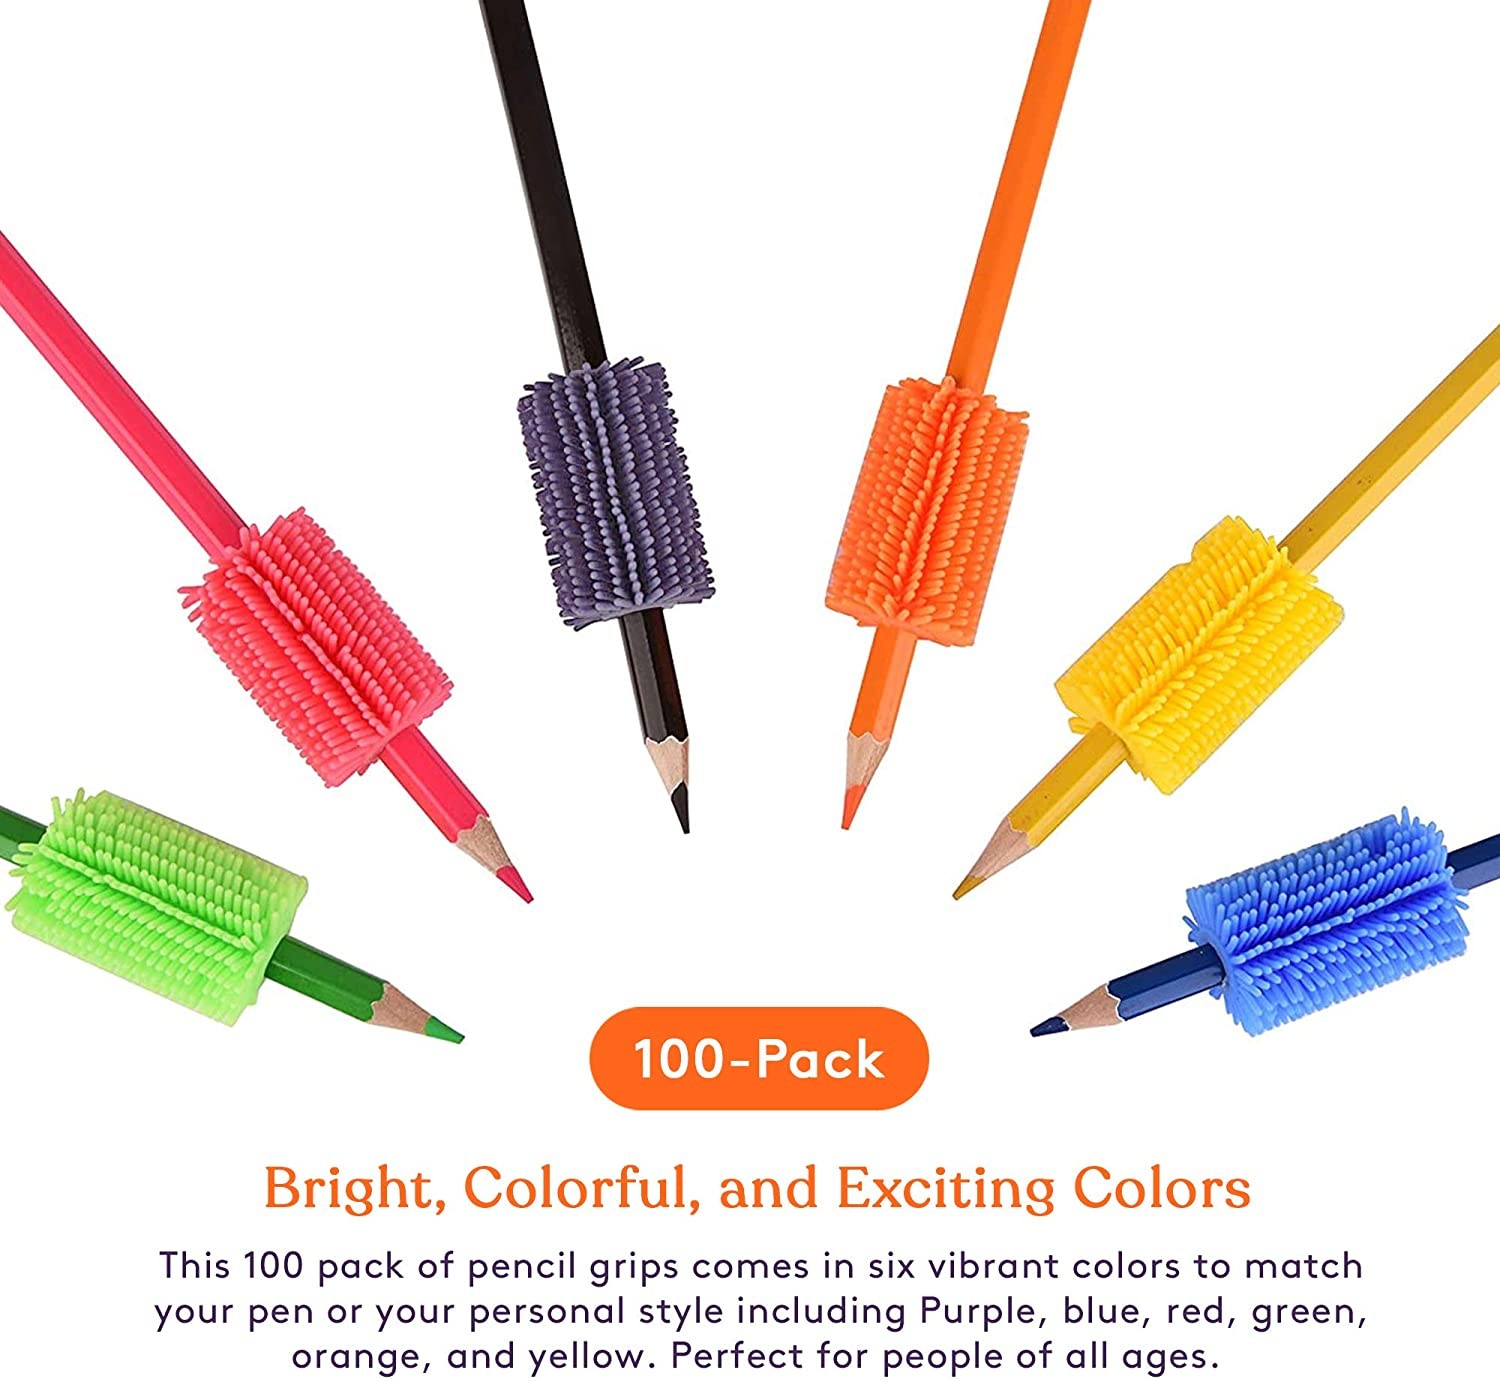 The Pencil Grip Mini Grip, Assorted Colors